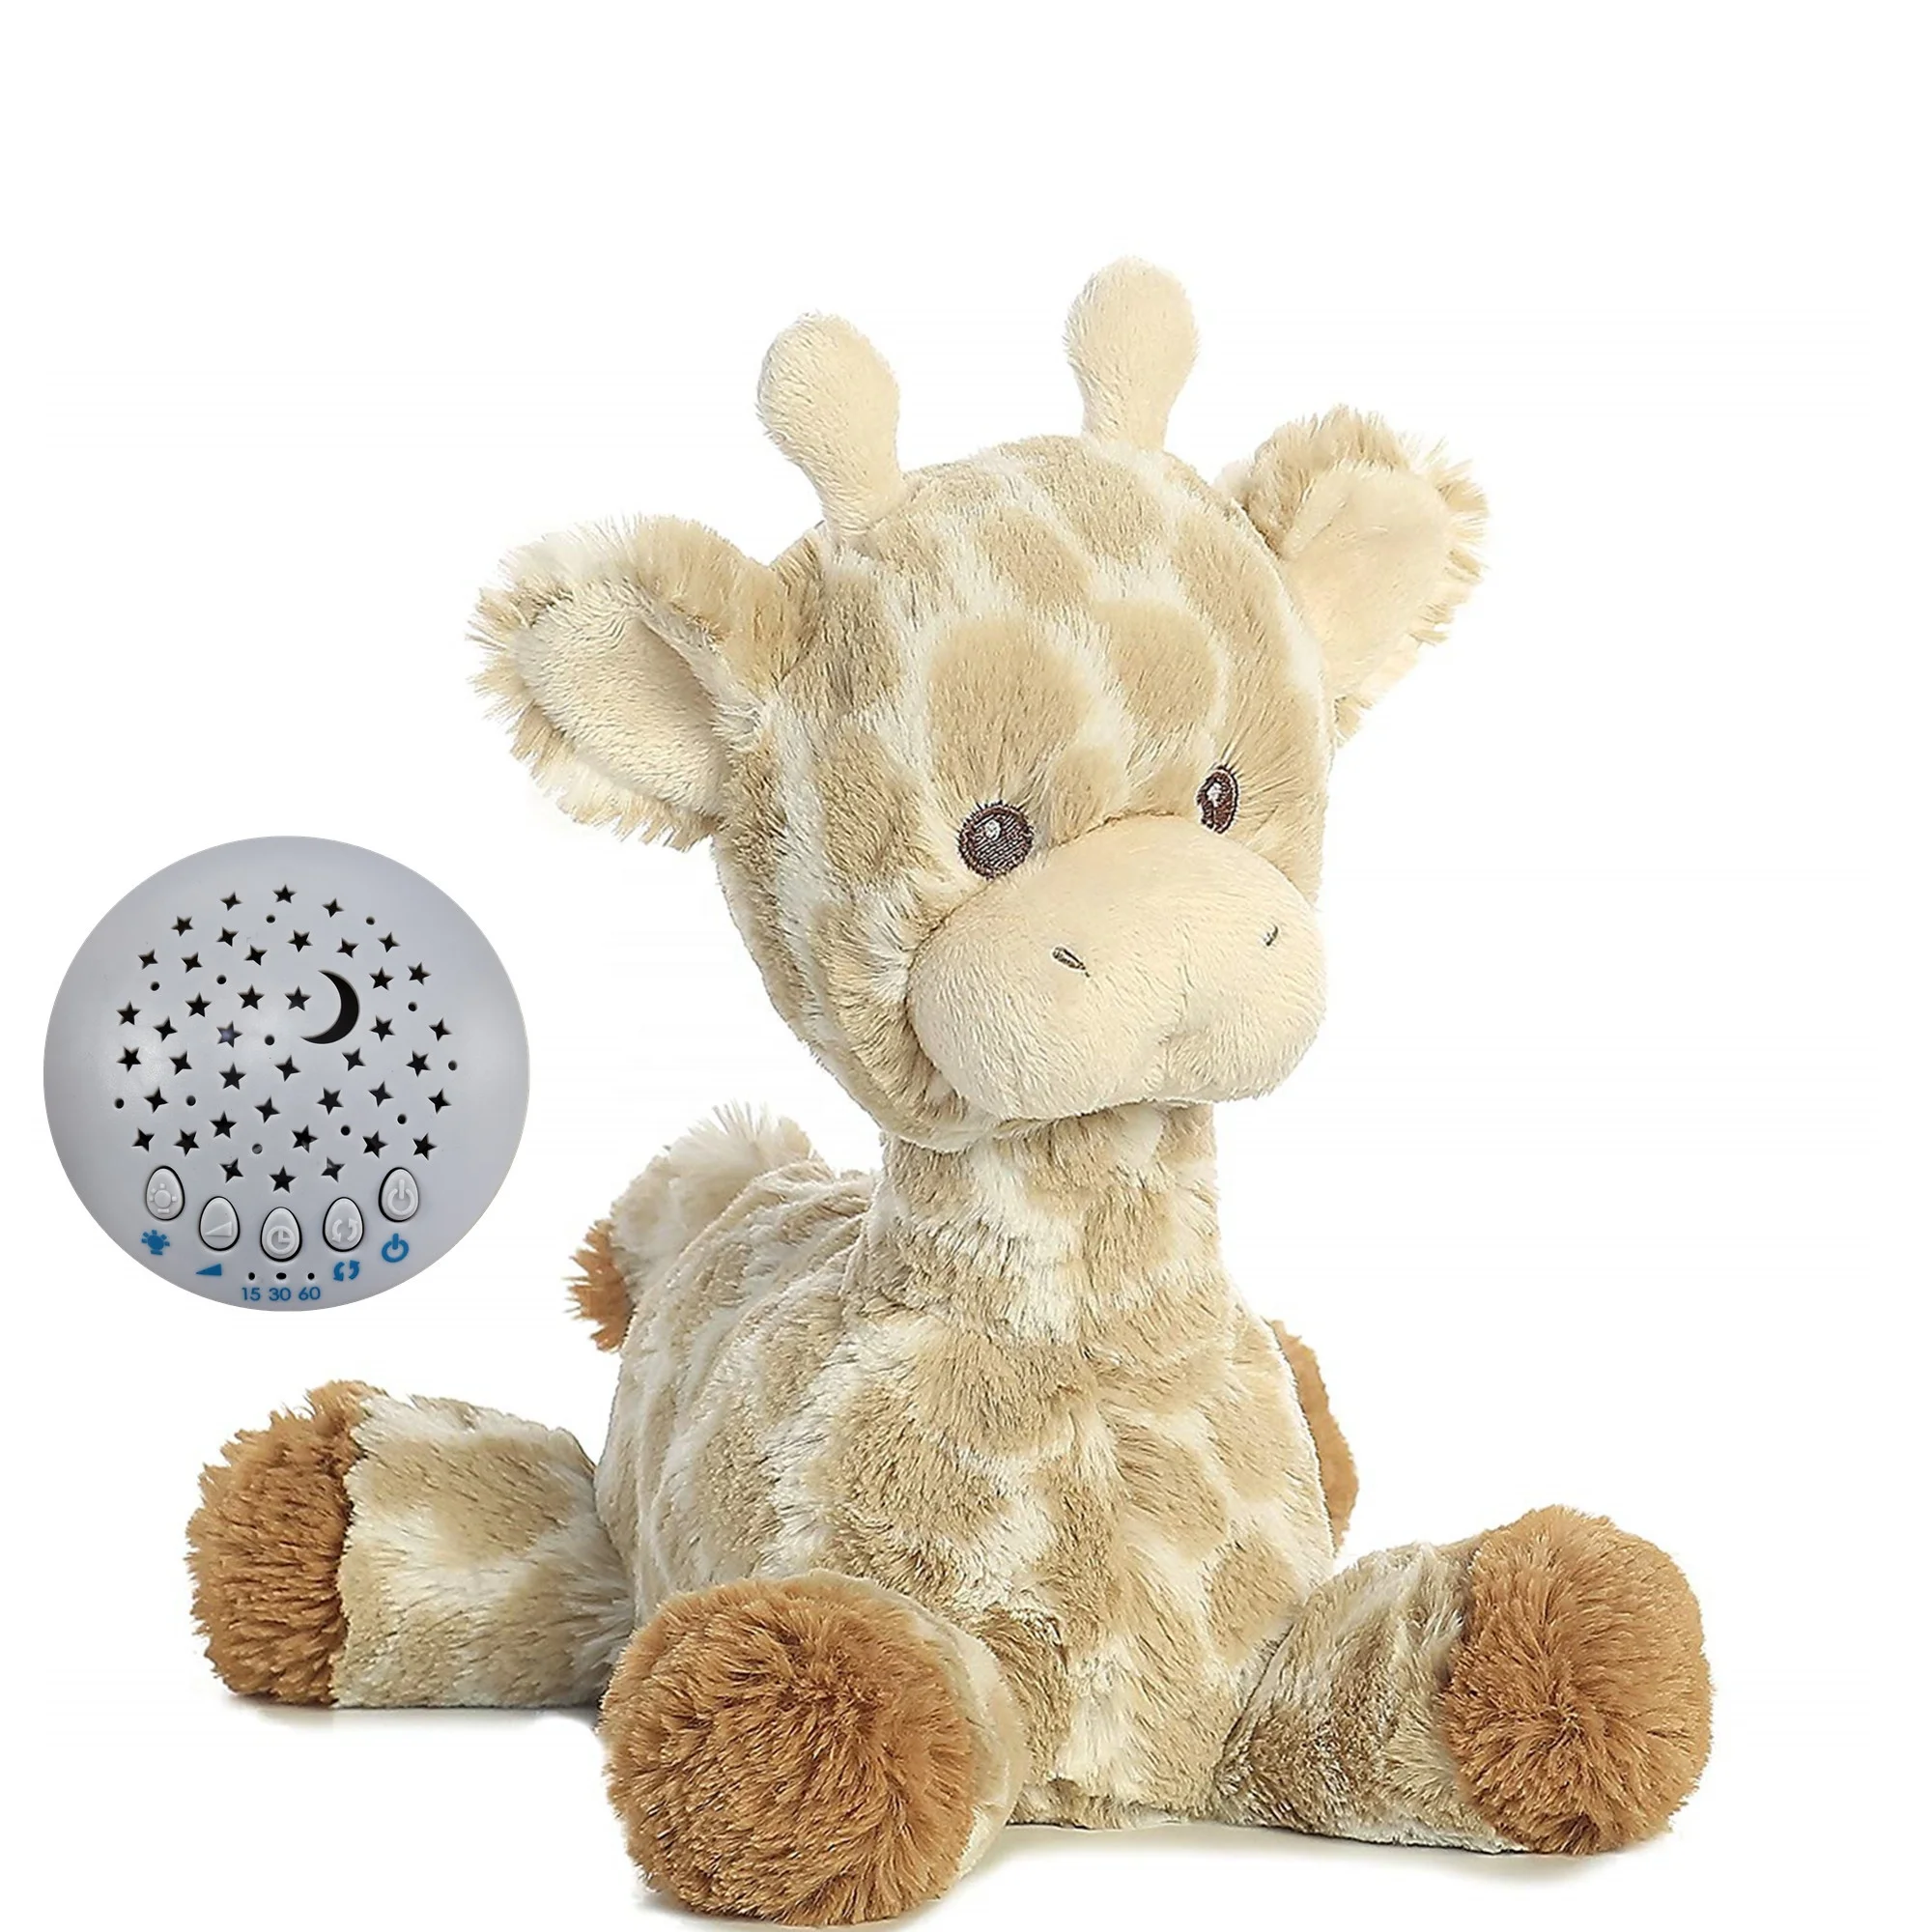 Details about   Soft Giraffe Stuffed Animal Room Decor Playset Baby Accompany Birthday Gift 